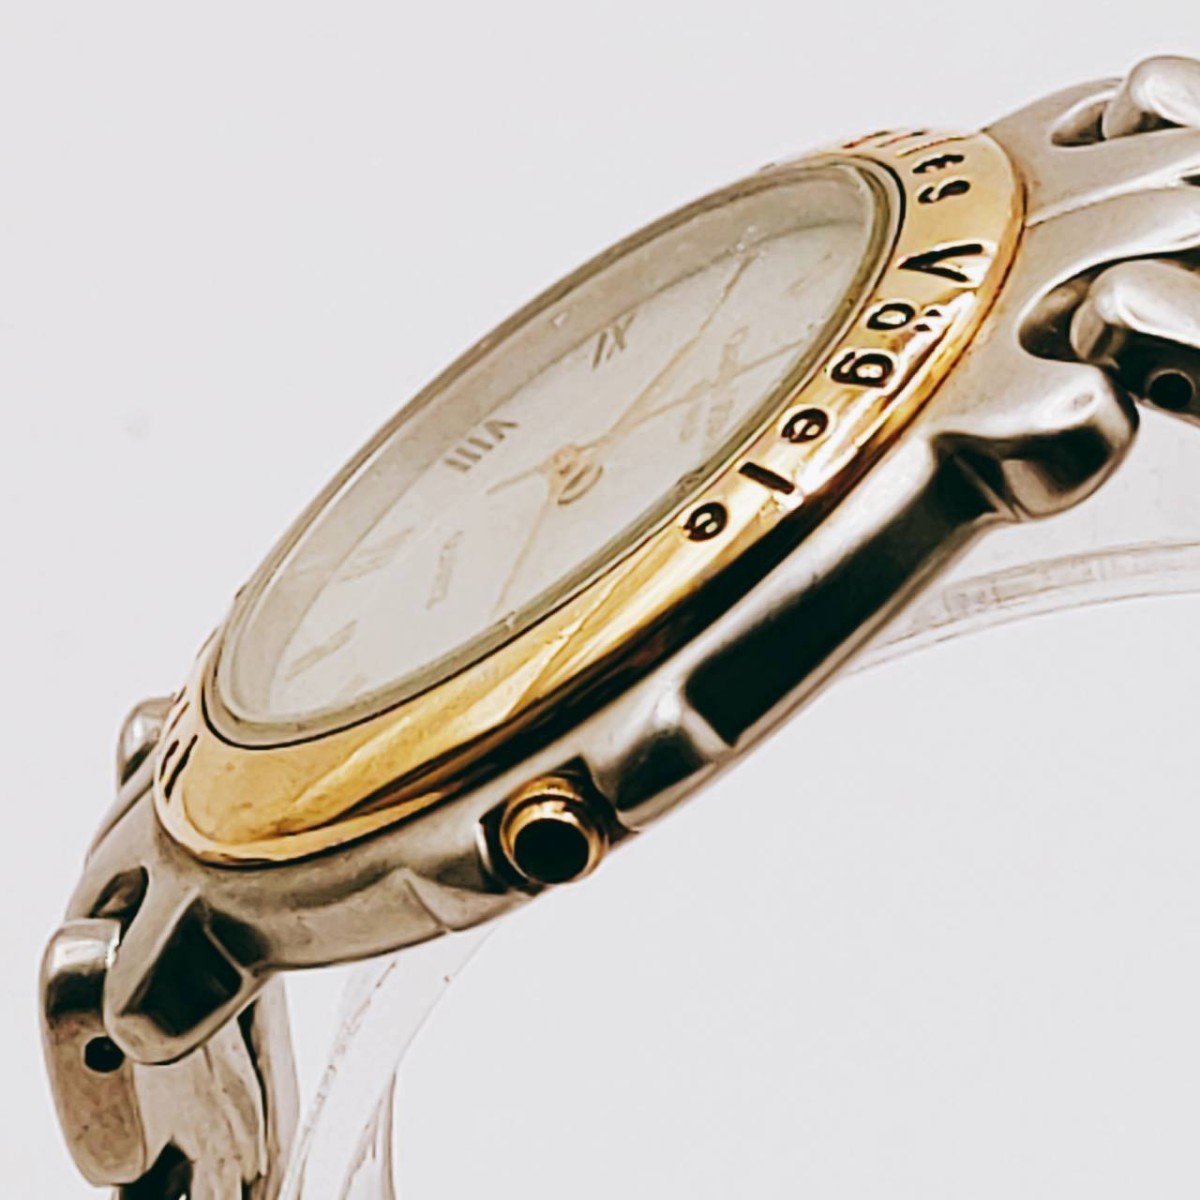 #1 Charles Vogele シャルルフォーゲル 腕時計 アナログ 3針 シェル色文字盤 シルバー基調 時計 とけい トケイ アクセサリー ヴィンテージ_画像5